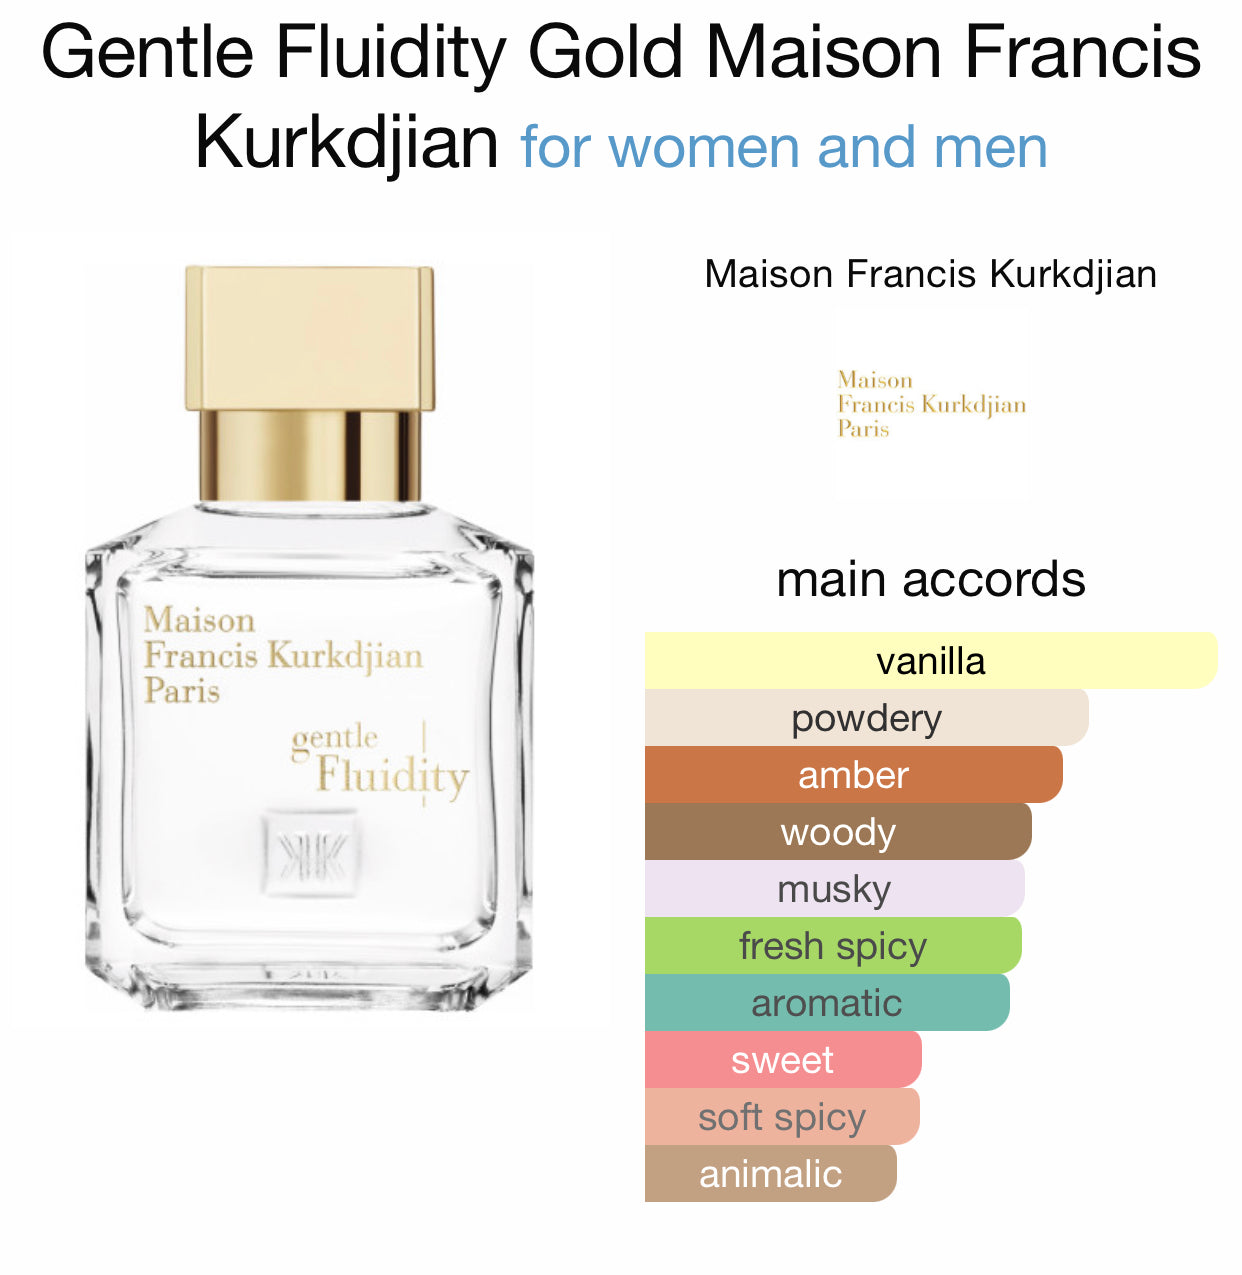 Inspired by Gentle Fluidity Gold Eau De Parfum